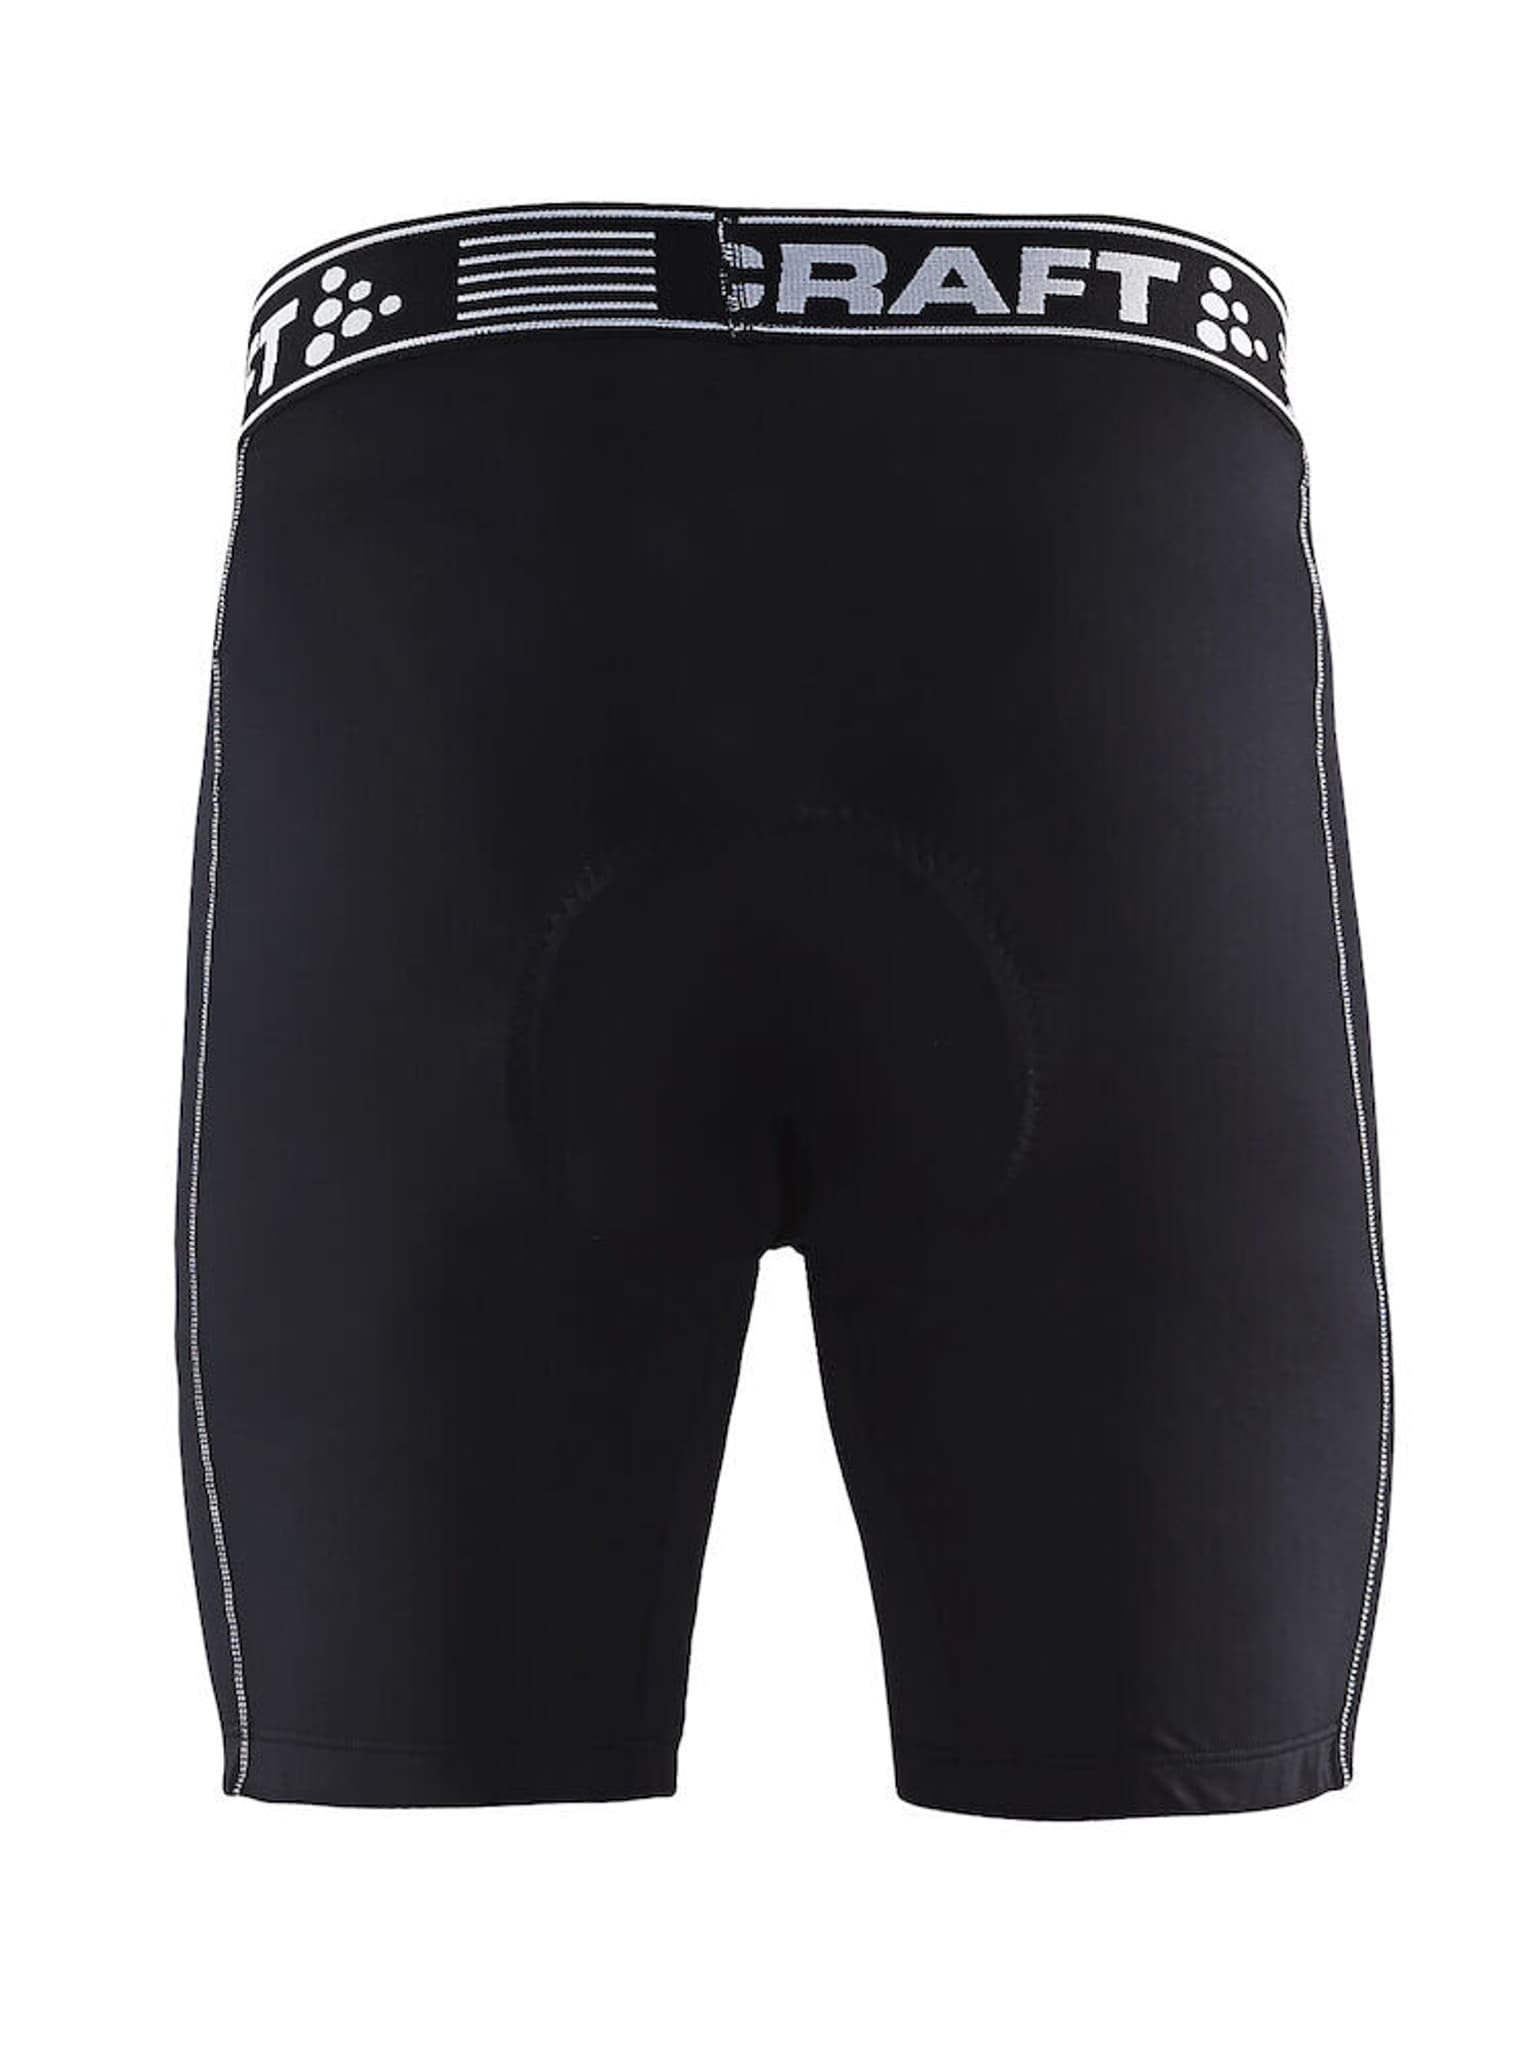 Craft Craft Core Greatness Bike Shorts Bikeshorts schwarz 4